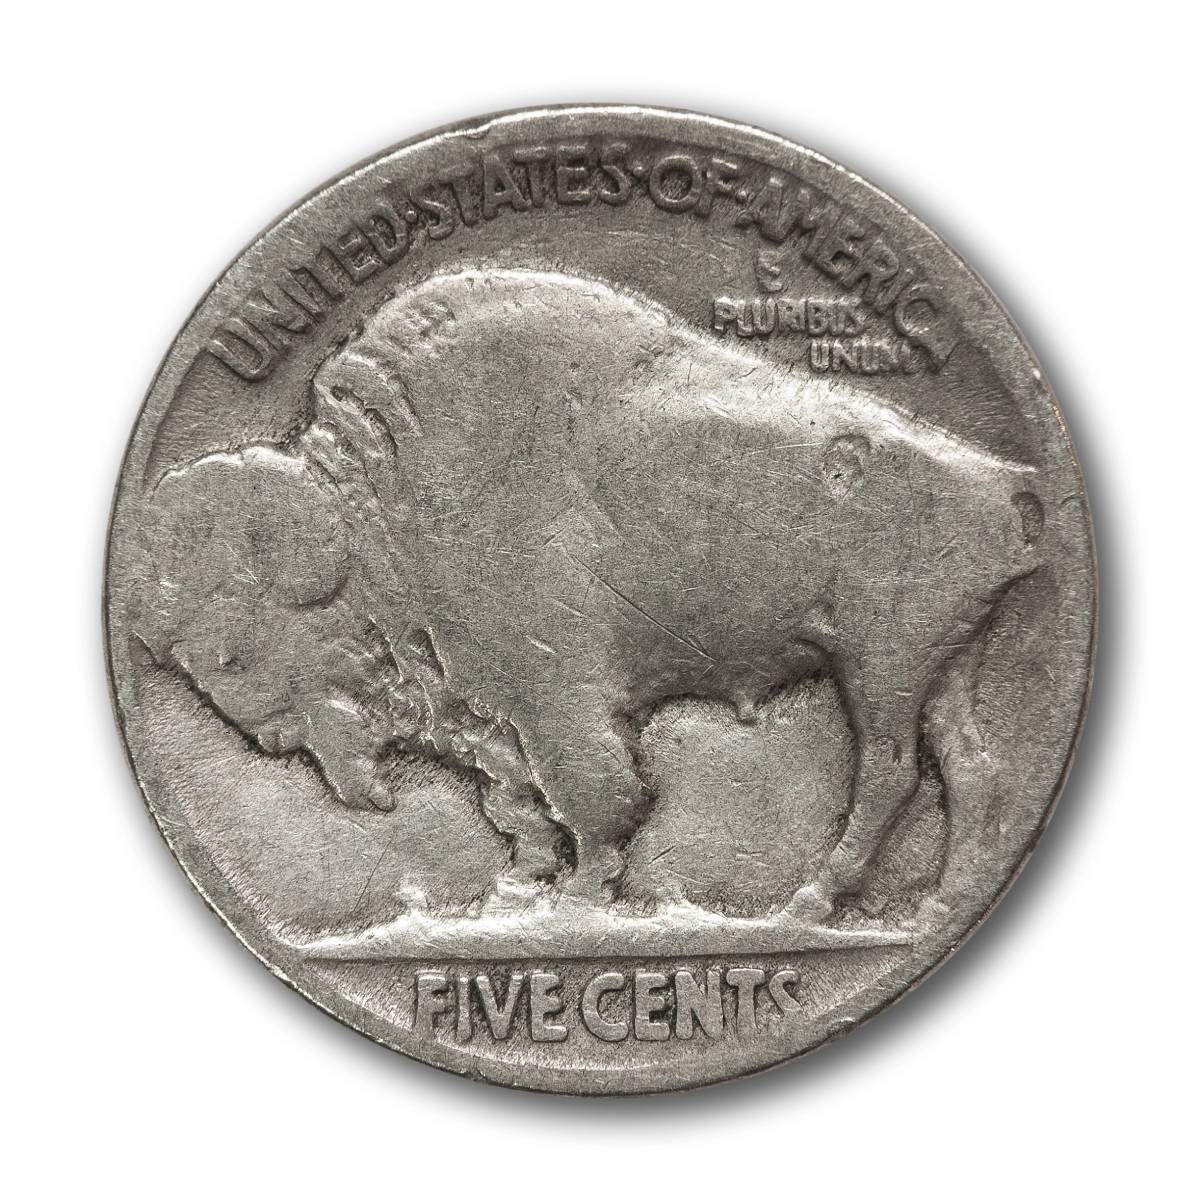 A closeup example of a dateless buffalo nickel - reverse.